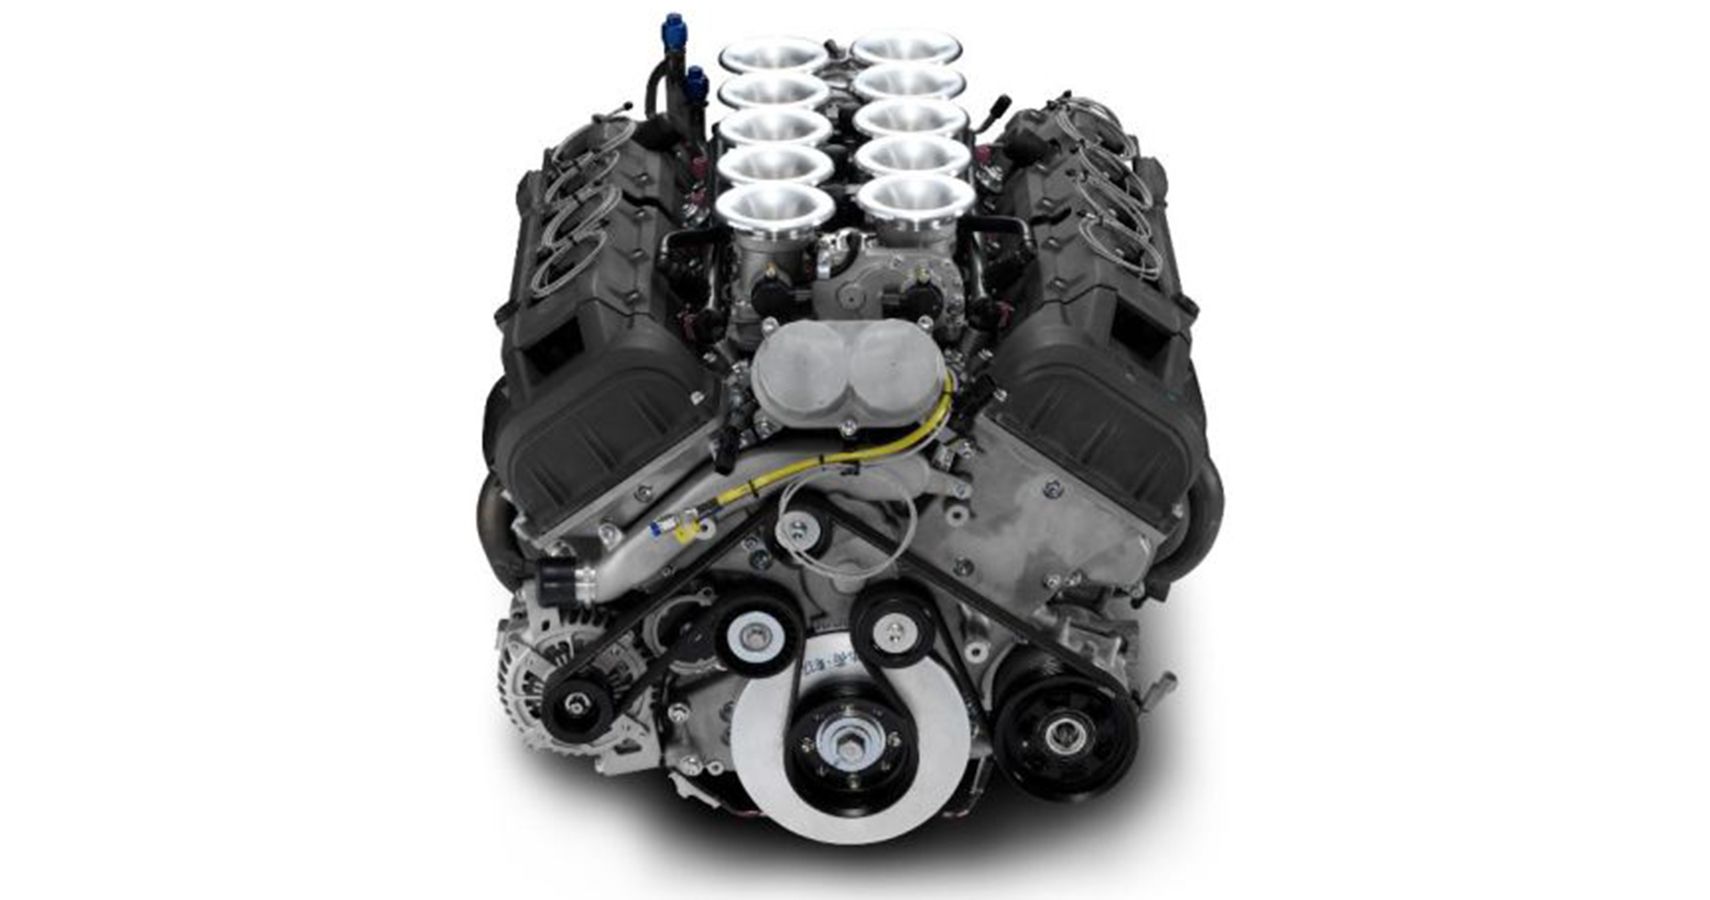 Lexus LFA supercar V10 engine prototype